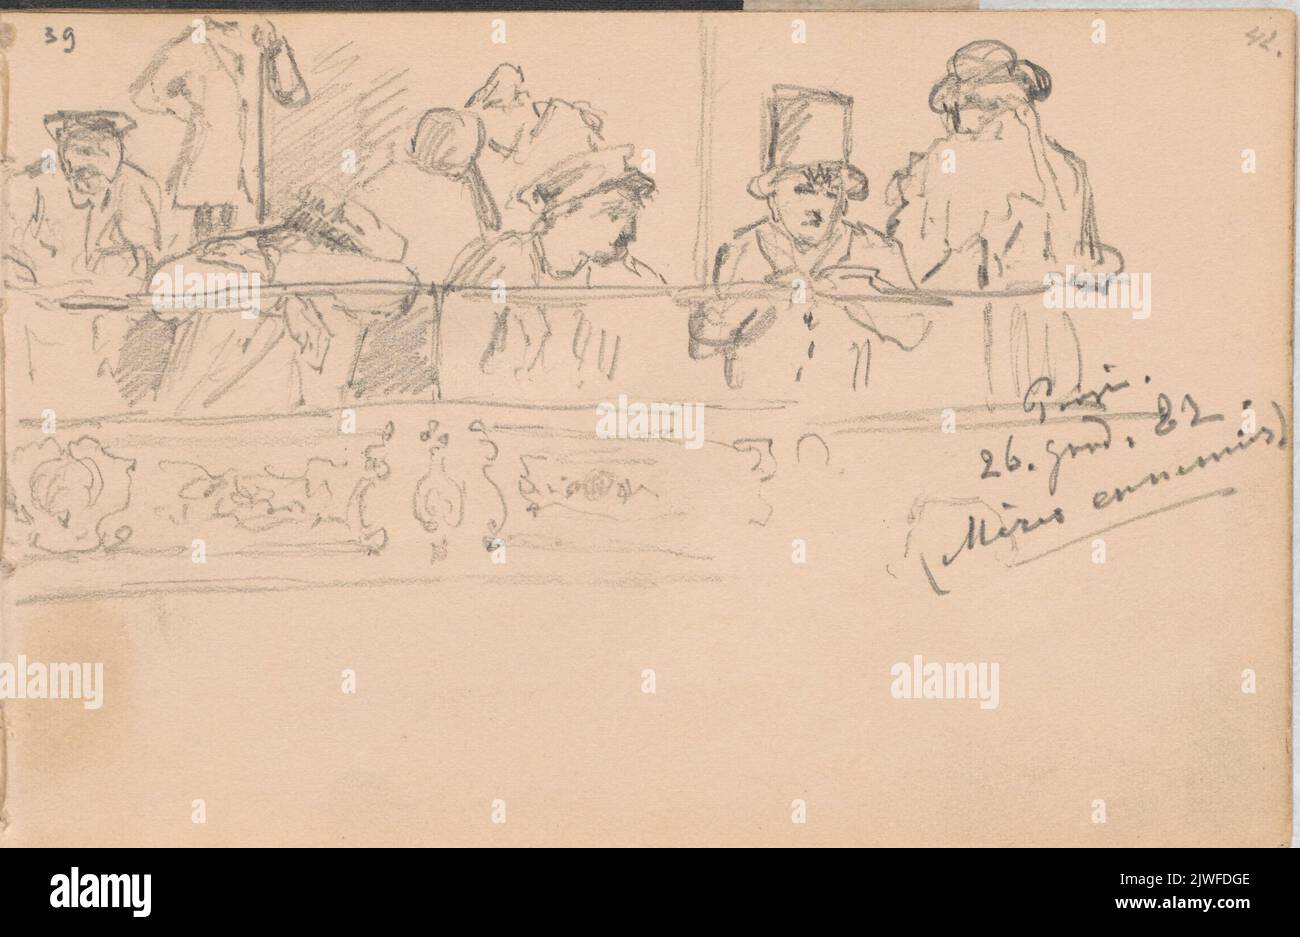 Scena w teatrze – publiczność na przedstawieniu sztuki Les meres ennemies Catulle’a Mendesa w Théâtre de l’Ambigu. Bilińska-Bohdanowiczowa, Anna (1854-1893), Zeichnerin, Karikaturistin Stockfoto